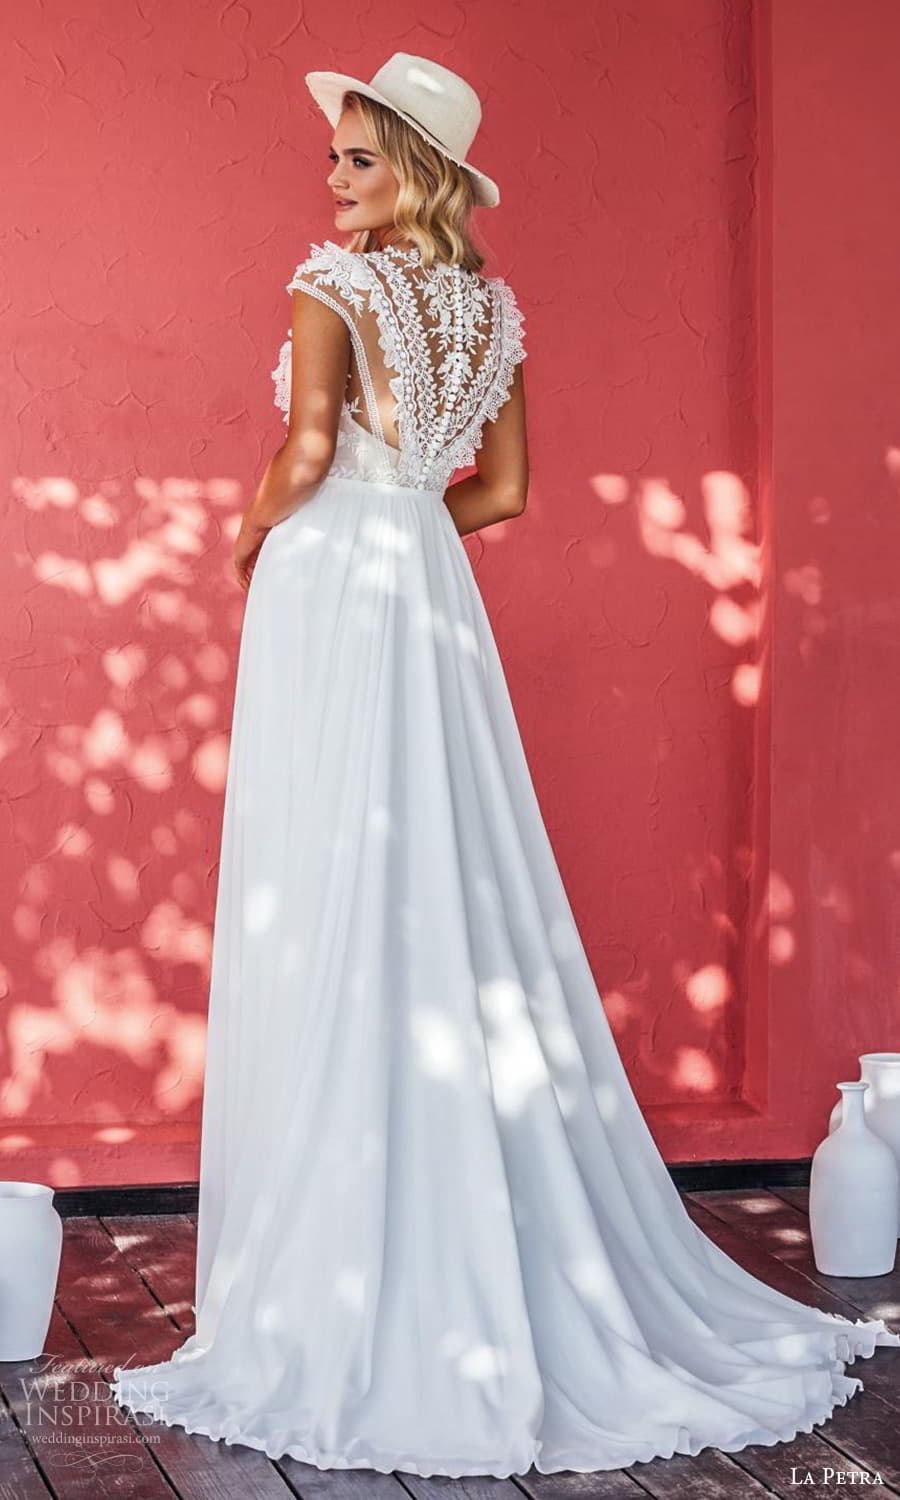 la petra 2021 bridal cap sleeve jewel sweetheart neckline embellished bodice clean skirt a line wedding dress chapel train (26) bv